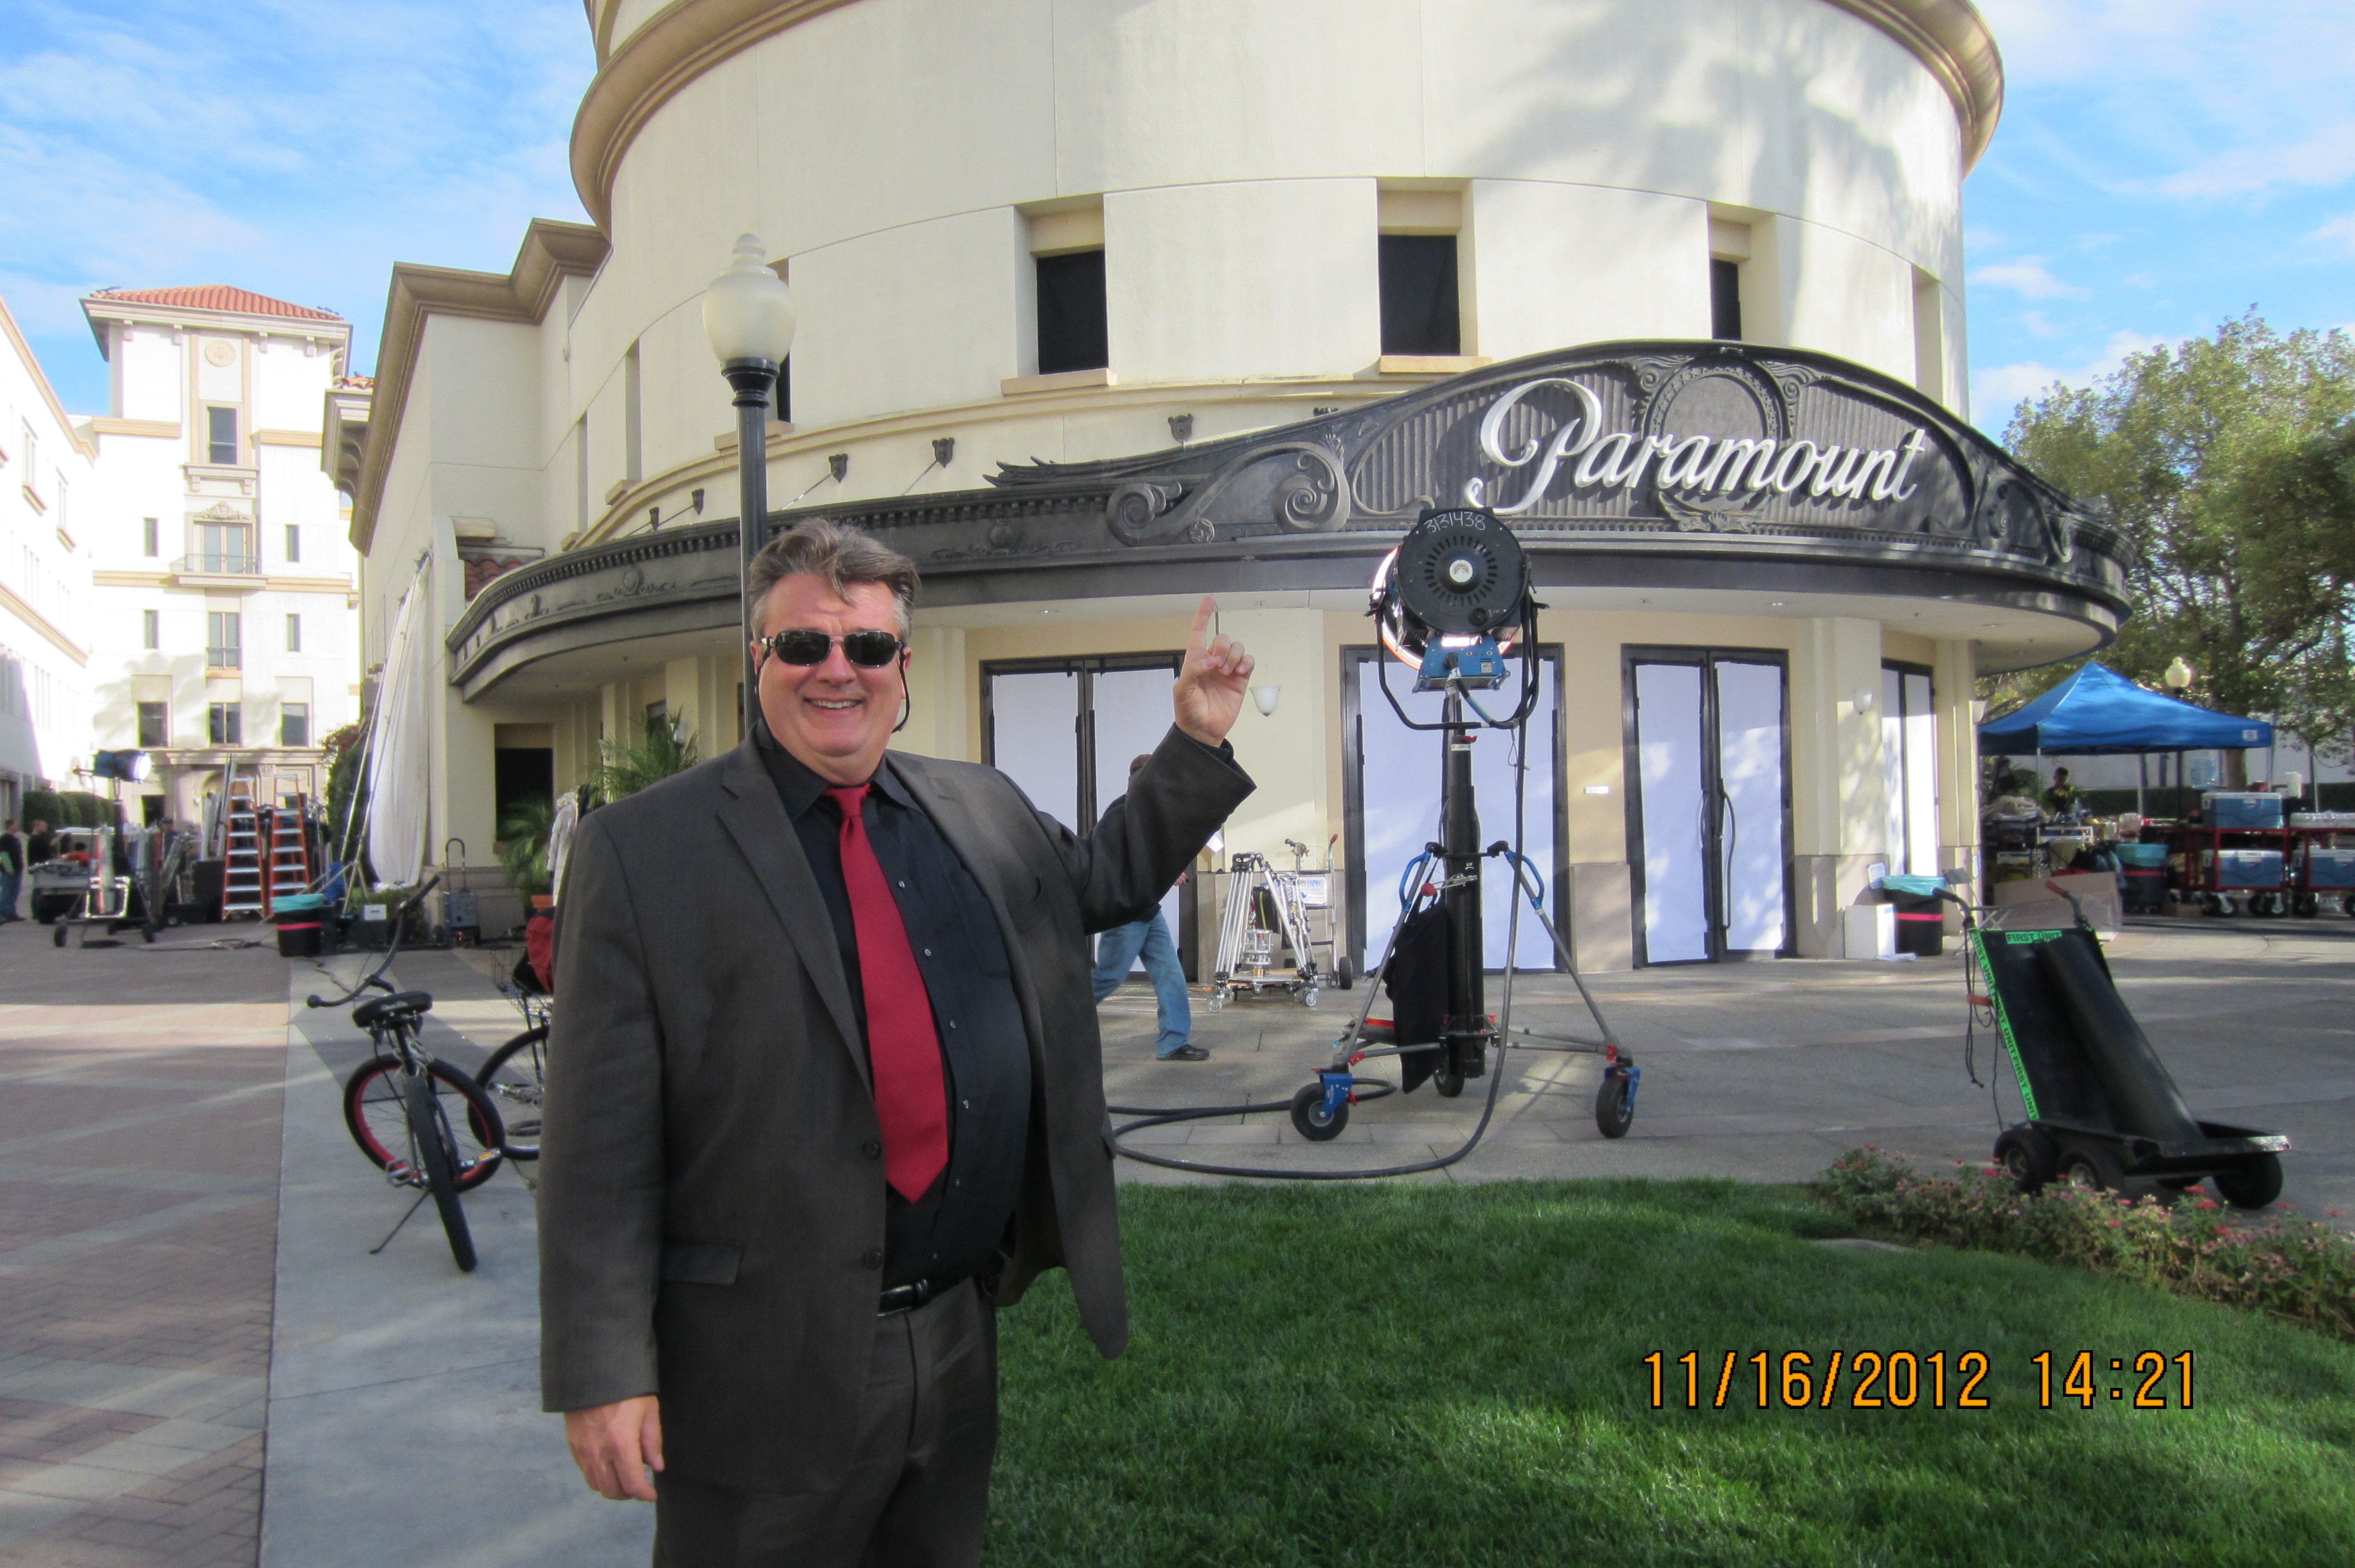 Kurt Kelly, Producer - Director, Actor - Voice Artist on set at Paramount Studios